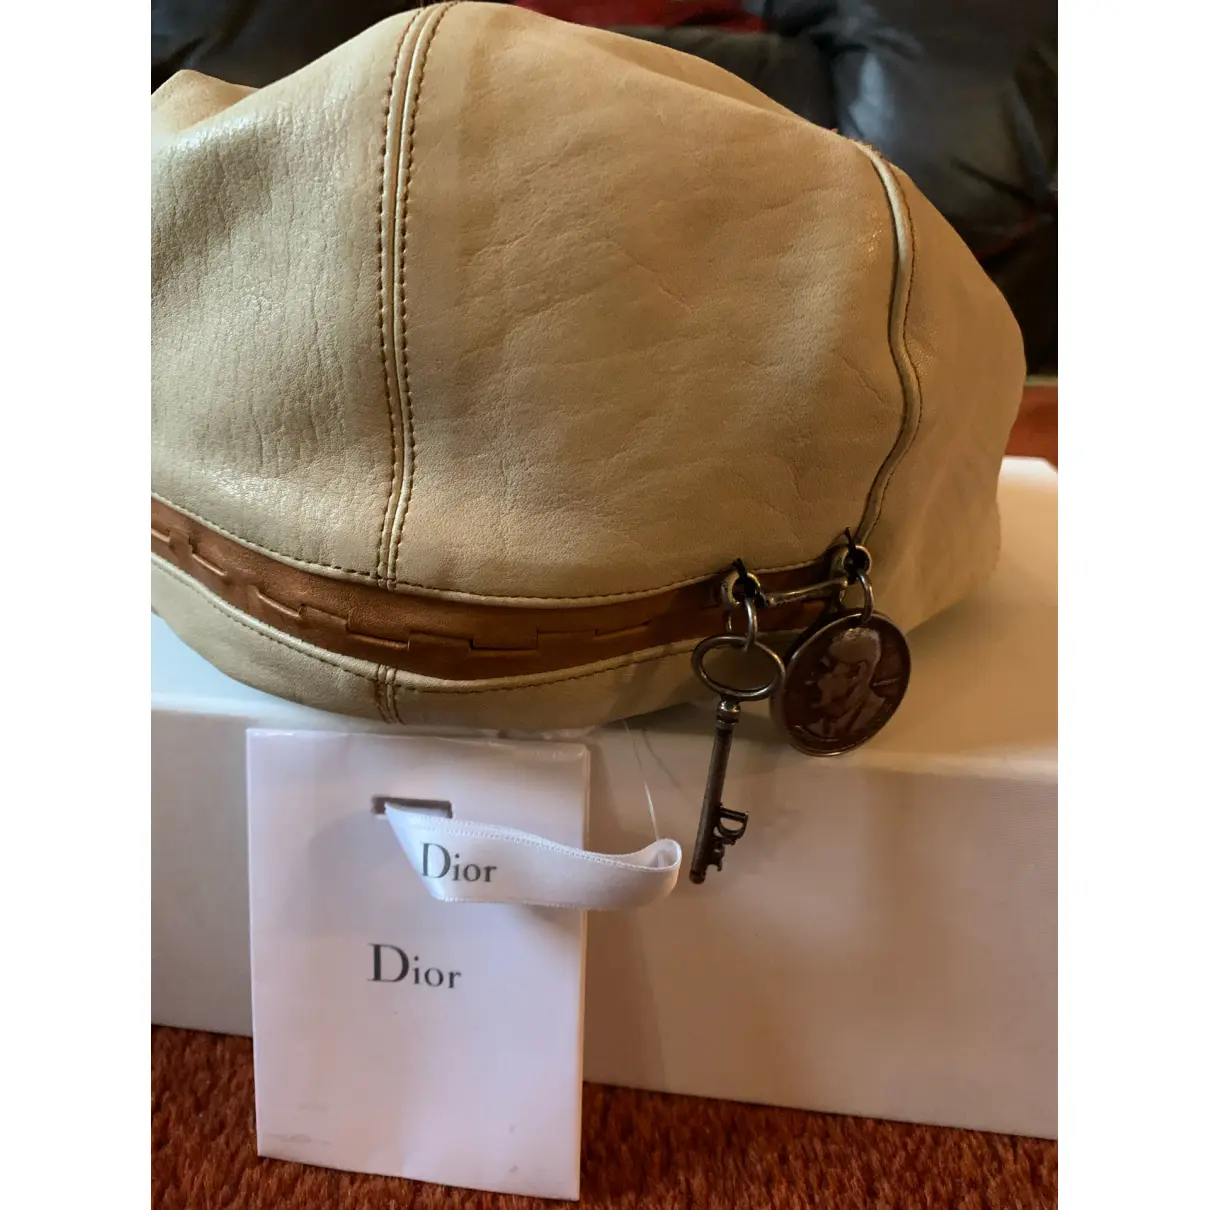 Buy Dior Leather cap online